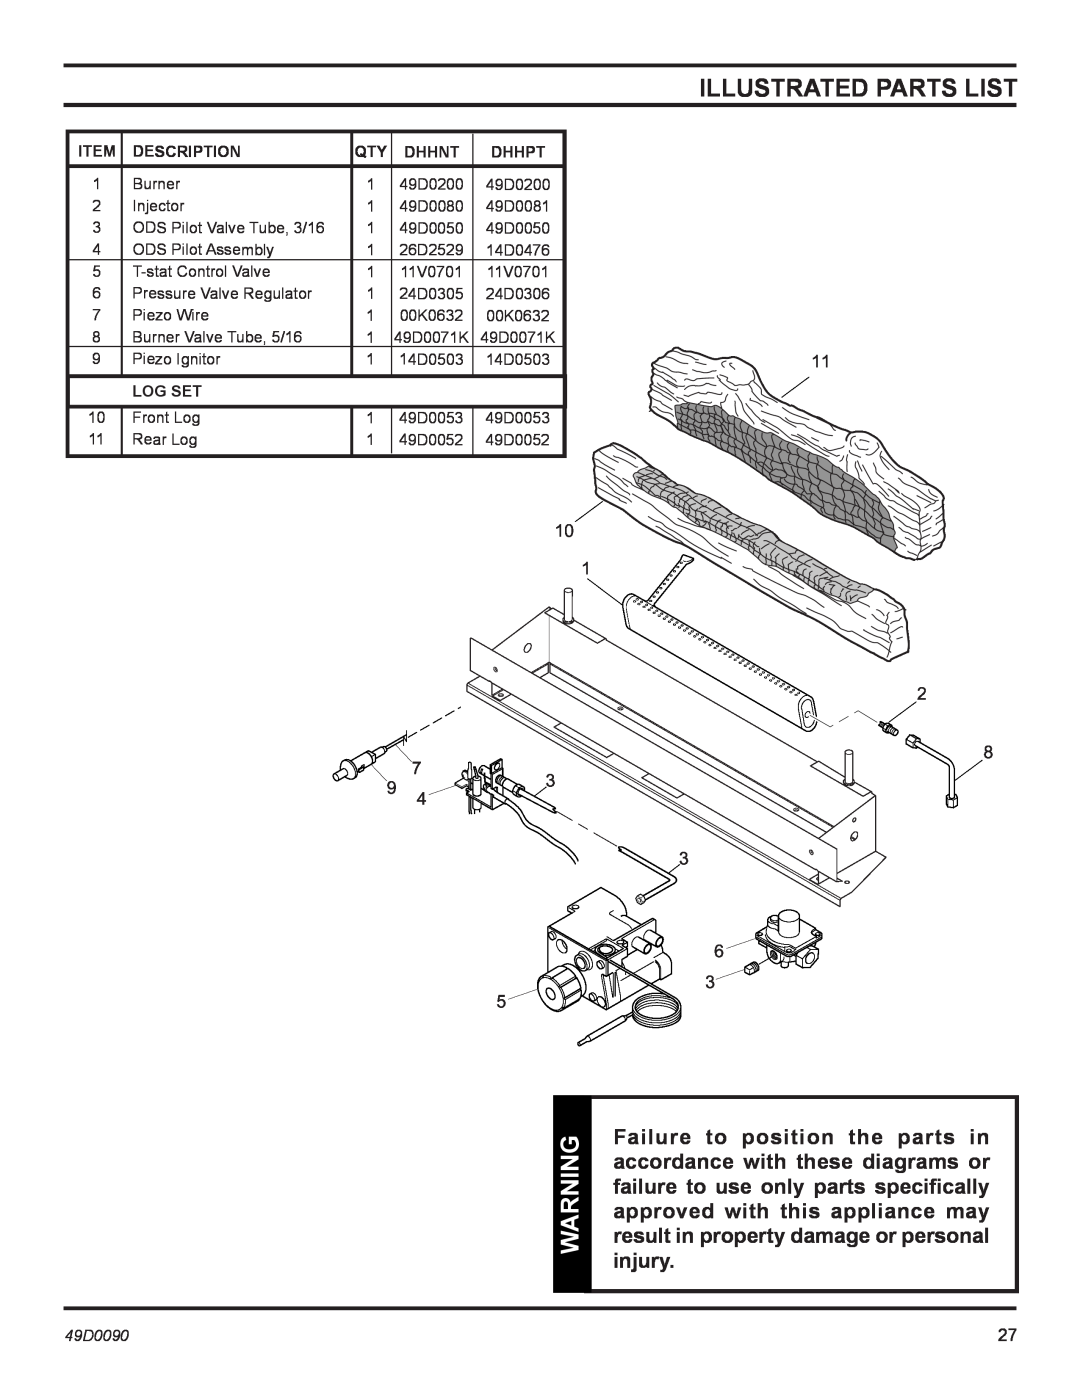 Monessen Hearth BTU/Hr installation manual Illustrated Parts List, Description, Dhhnt, Dhhpt, Log Set, 49D0090 